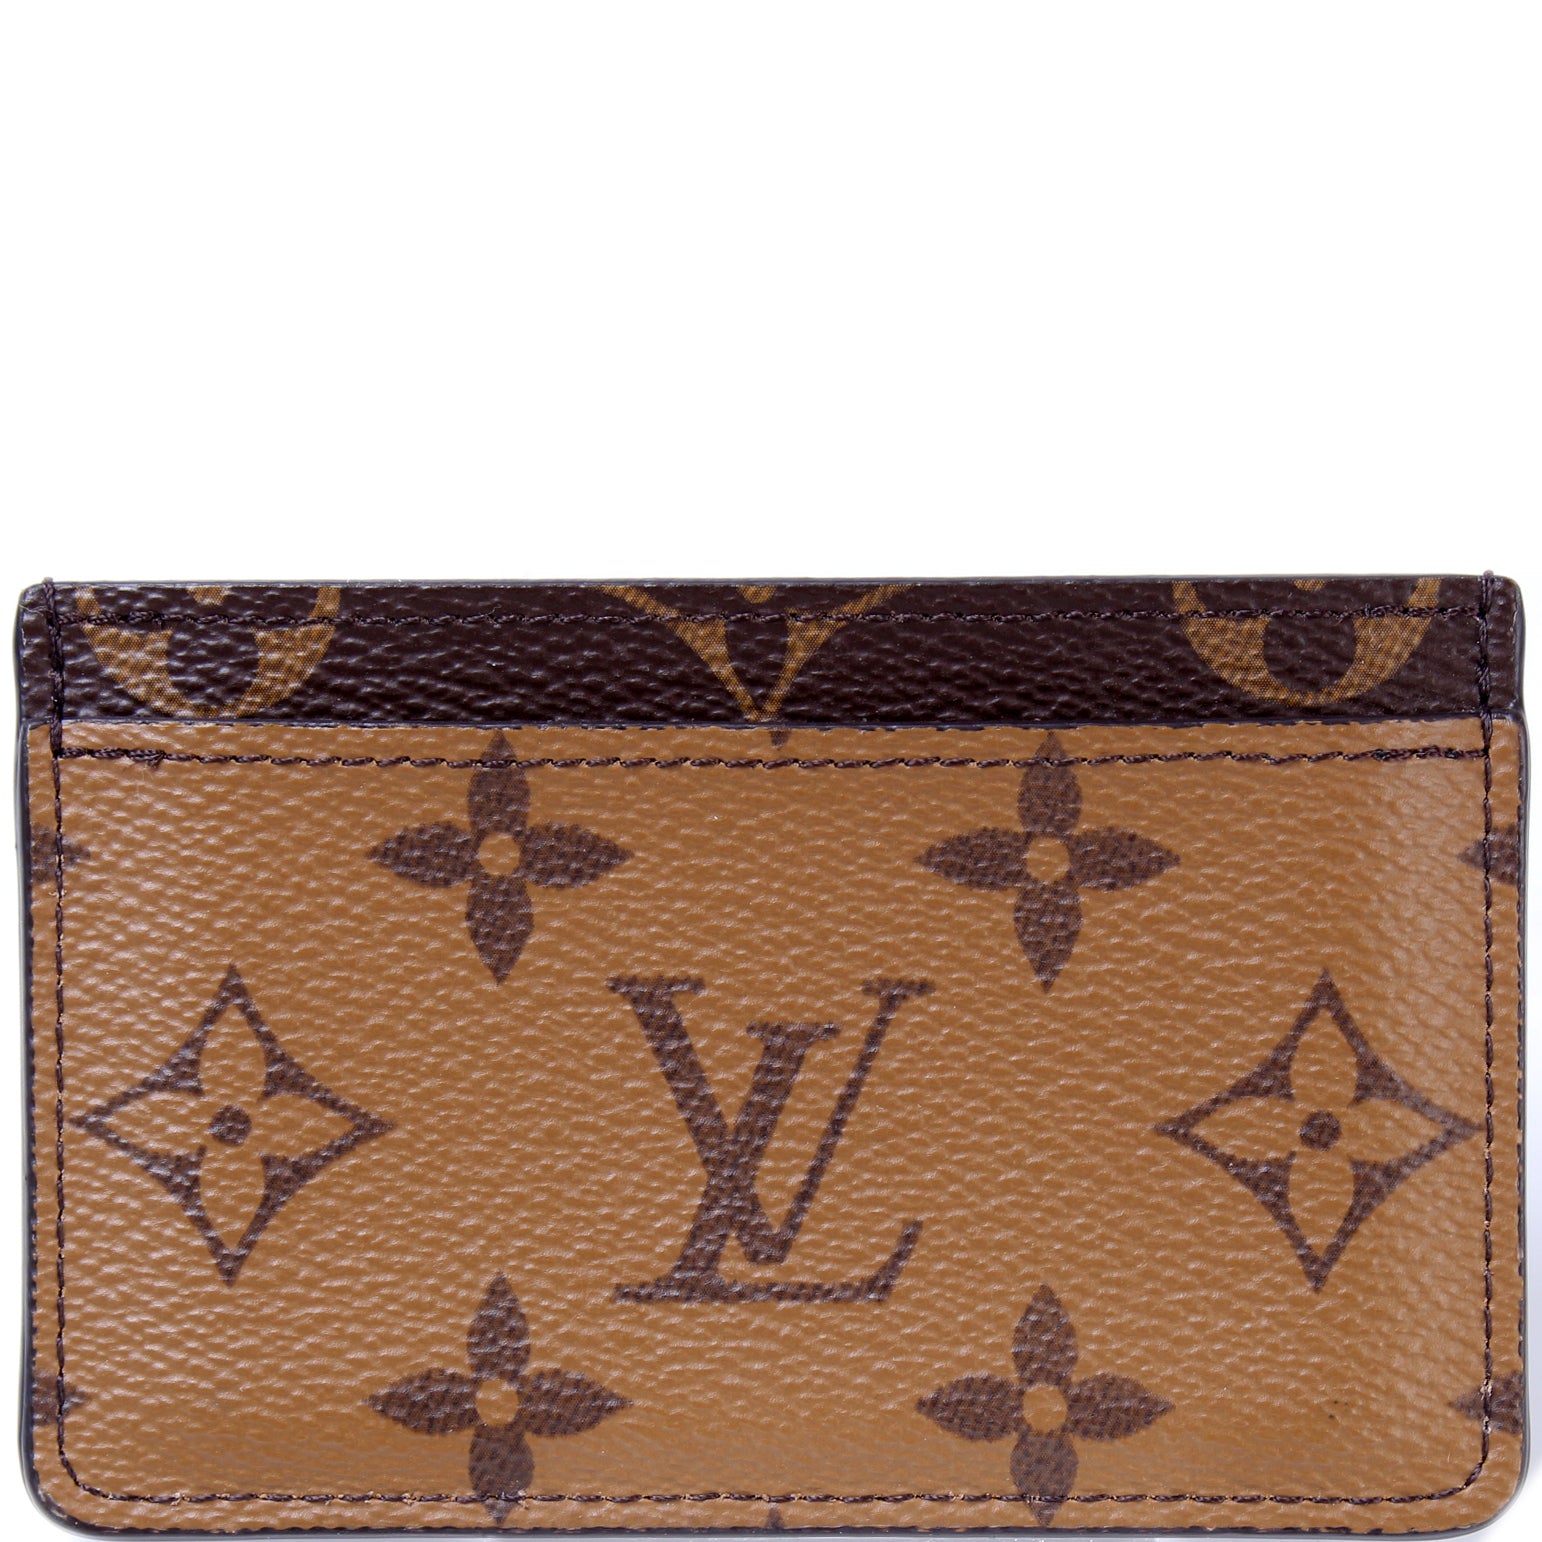 New Louis Vuitton reverse monogram card holder